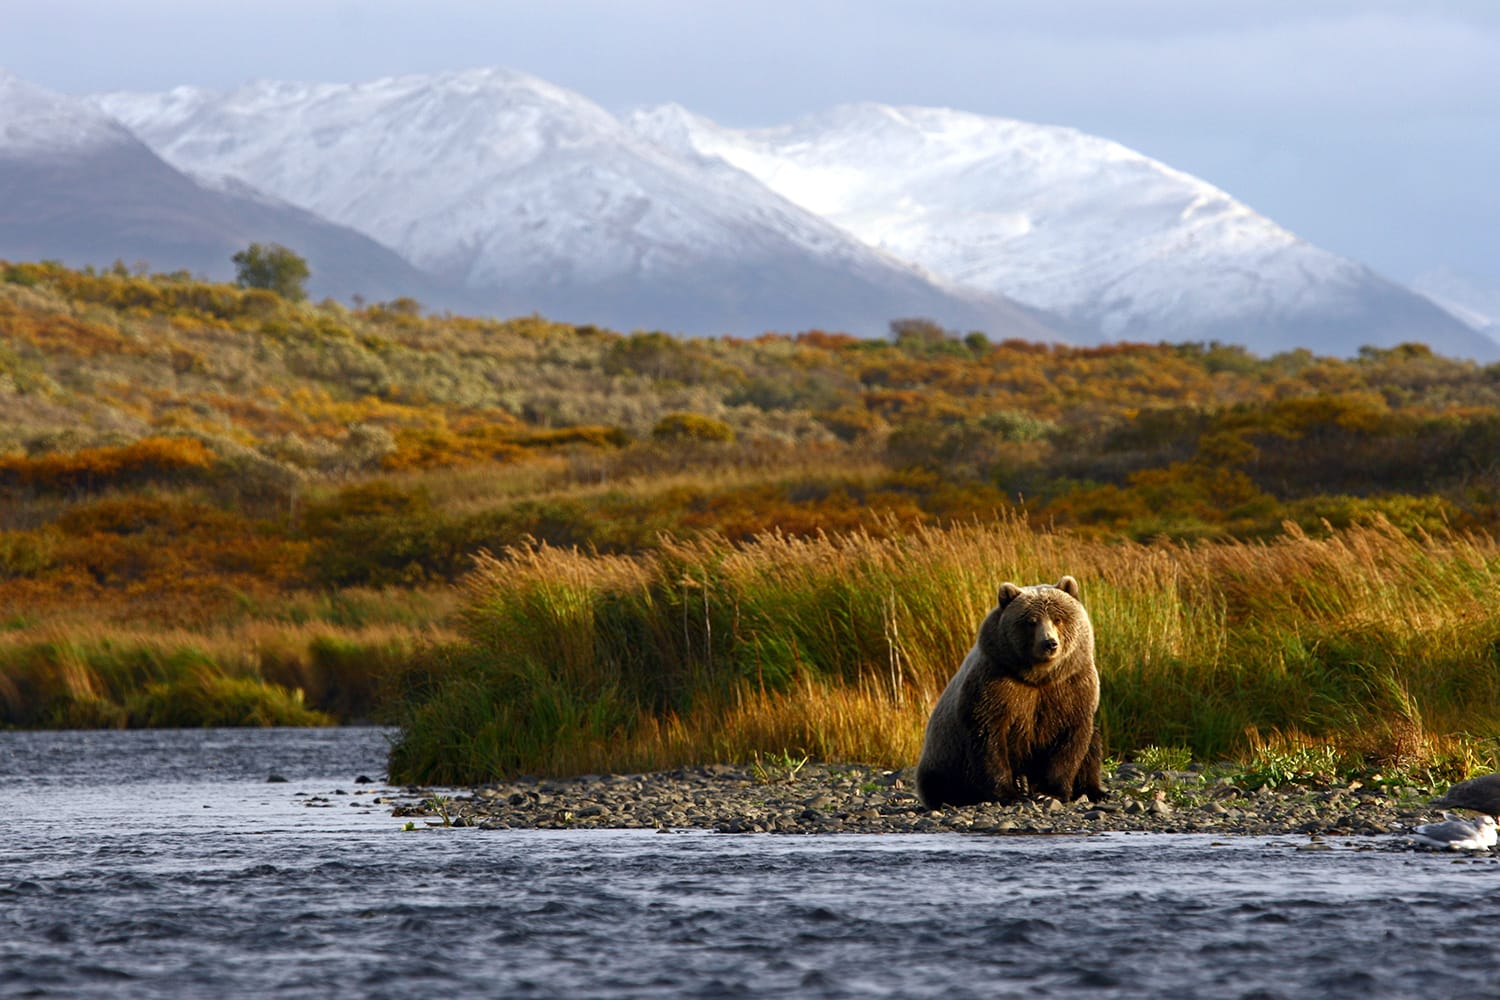 Kodiak brown bear looking for salmon in the river in Alaska